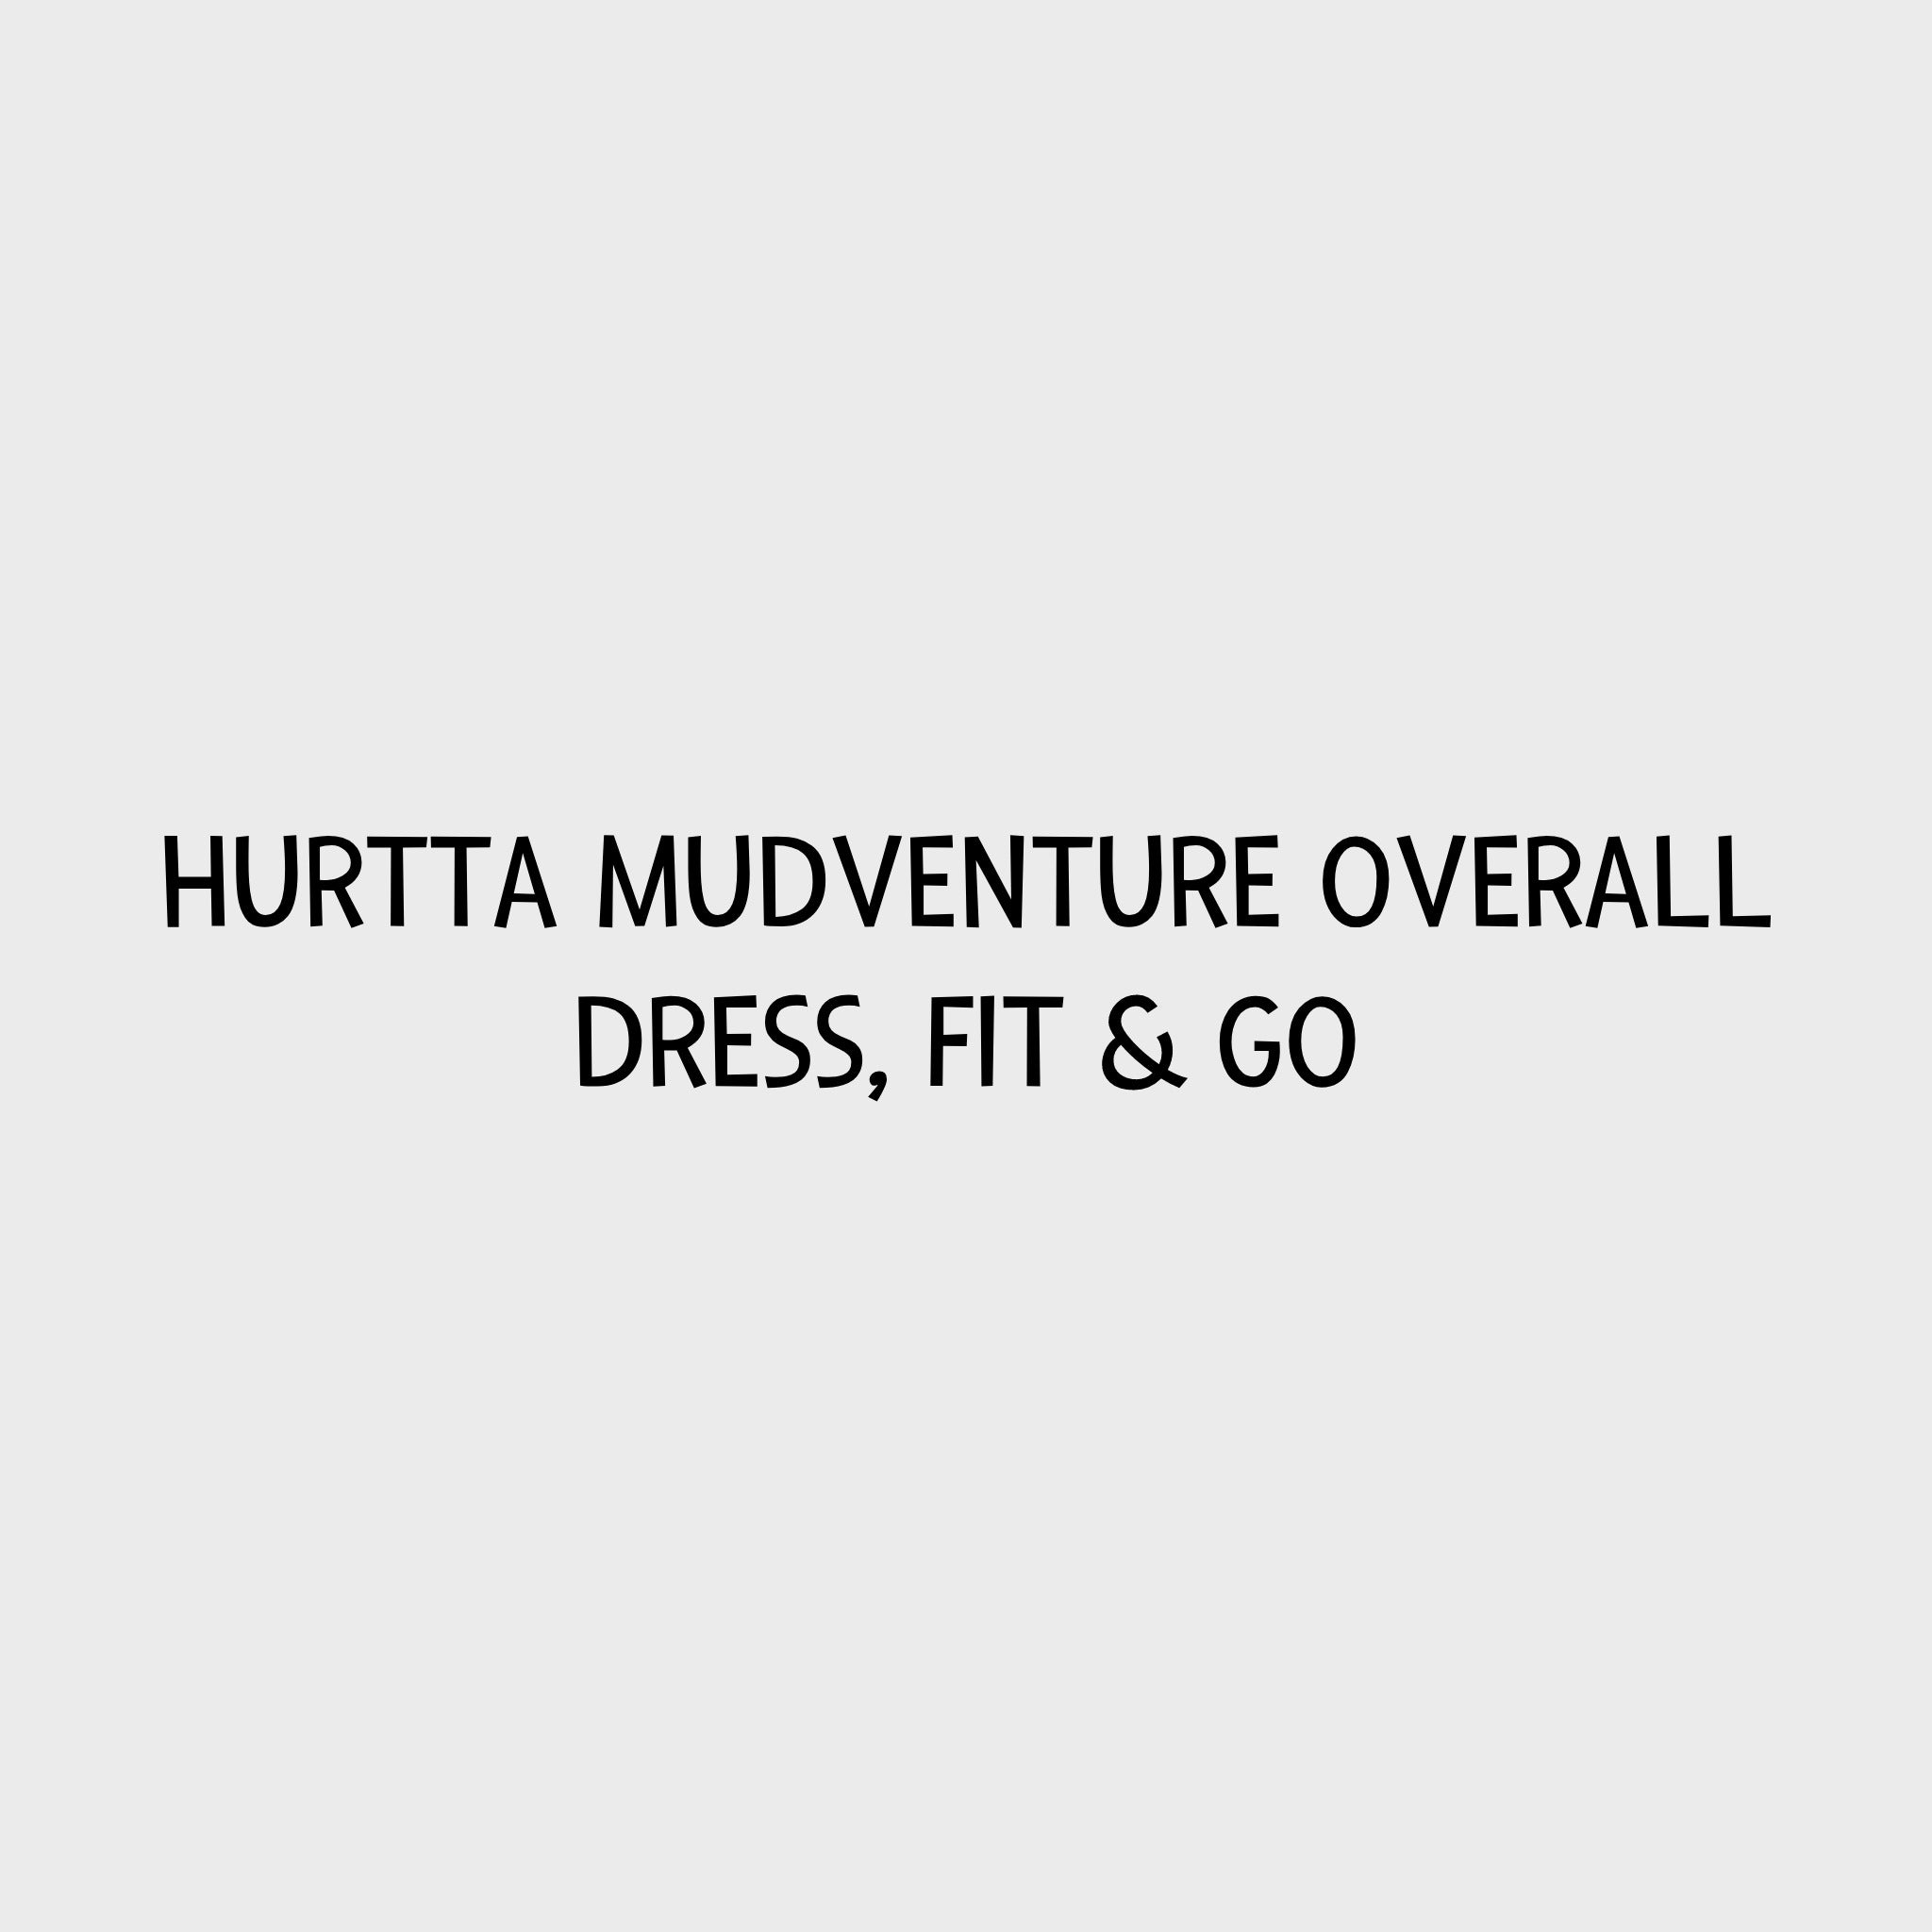 Video - Hurtta Mudventure Overall Dress, Fit & Go